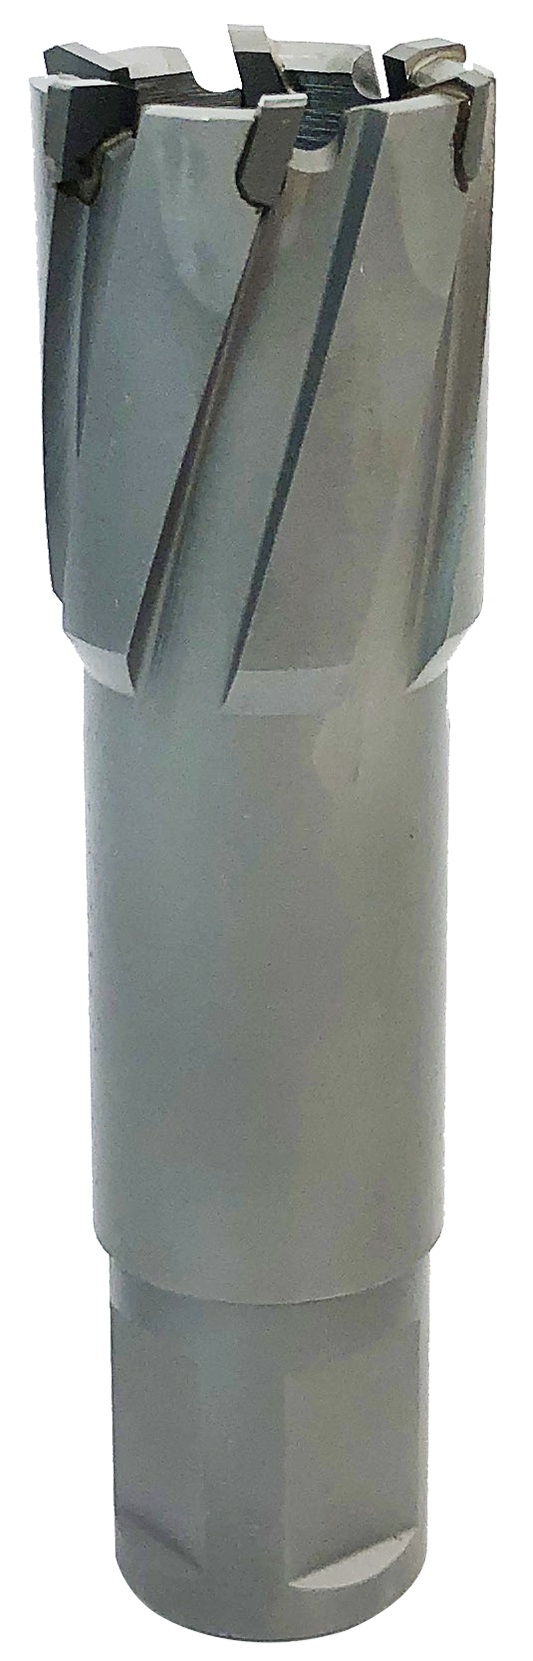 Корончатое сверло (фреза кольцевая) Ø17 L=55/92 мм №308 WELDON19 TCT (твердый сплав) ТМ ПрофОснастка